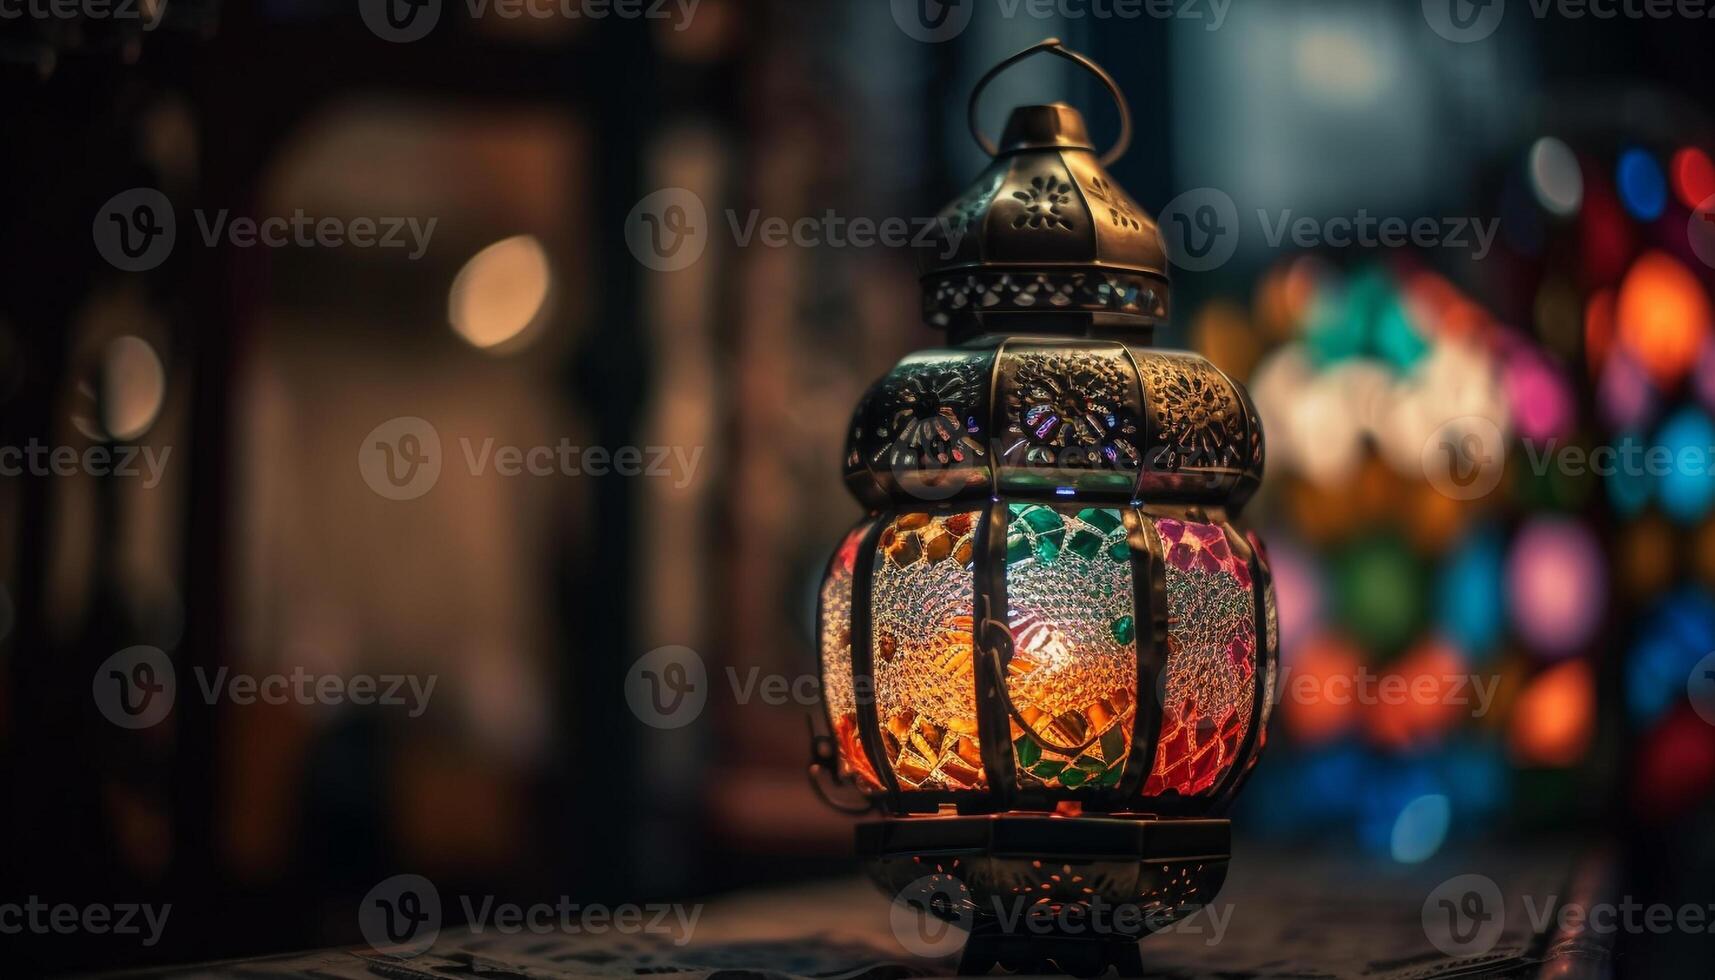 Candlelight illuminates ornate lantern in traditional festival celebration generated by AI photo